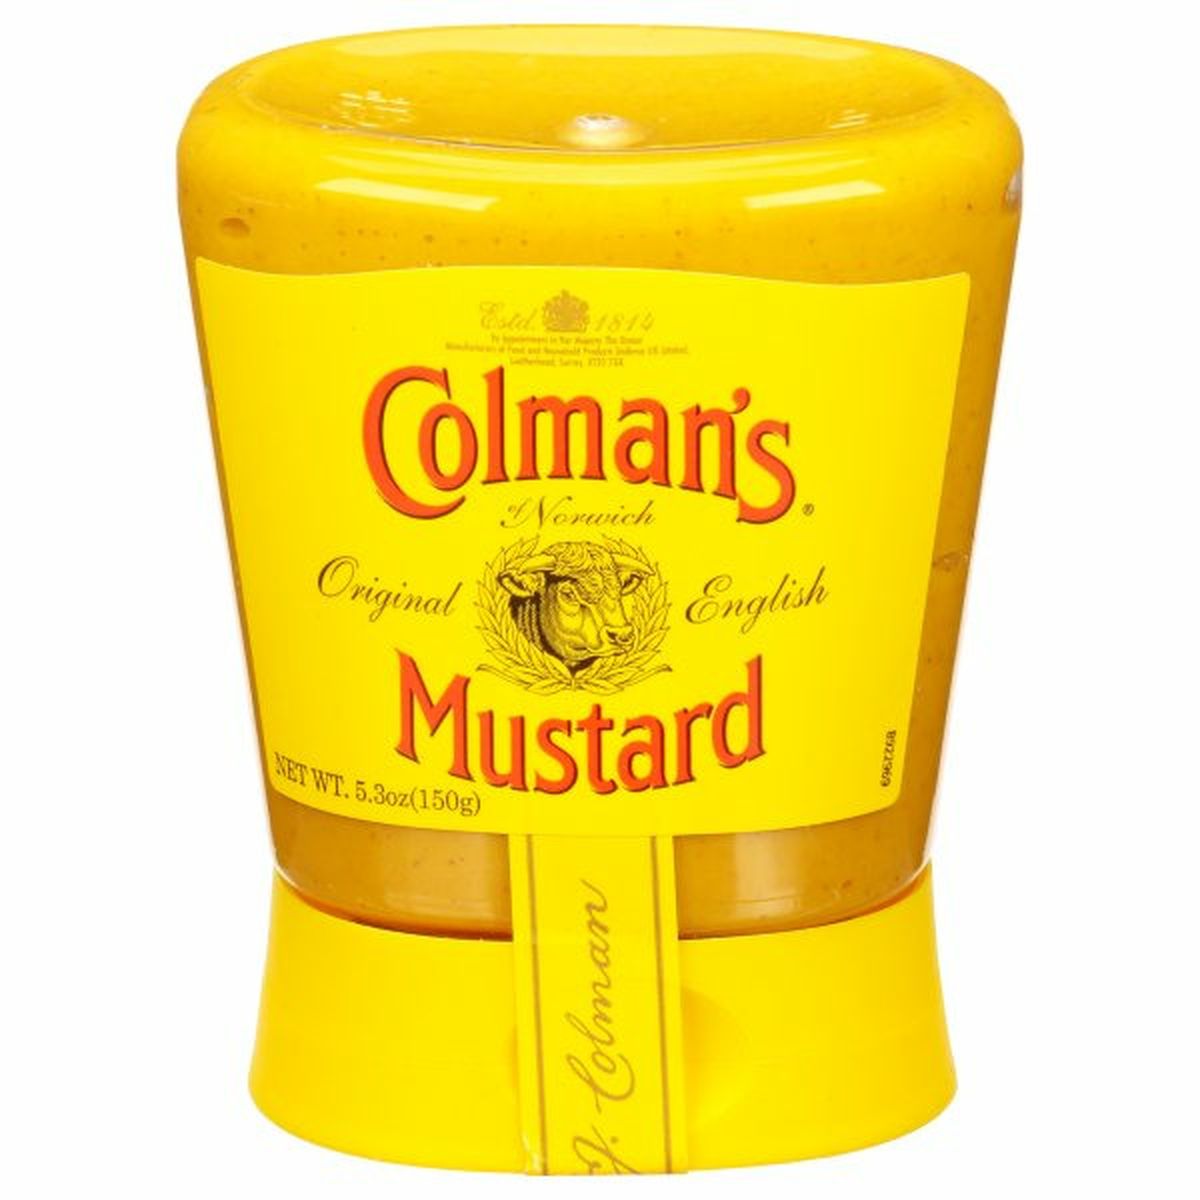 Calories in Colman's Mustard, Original English